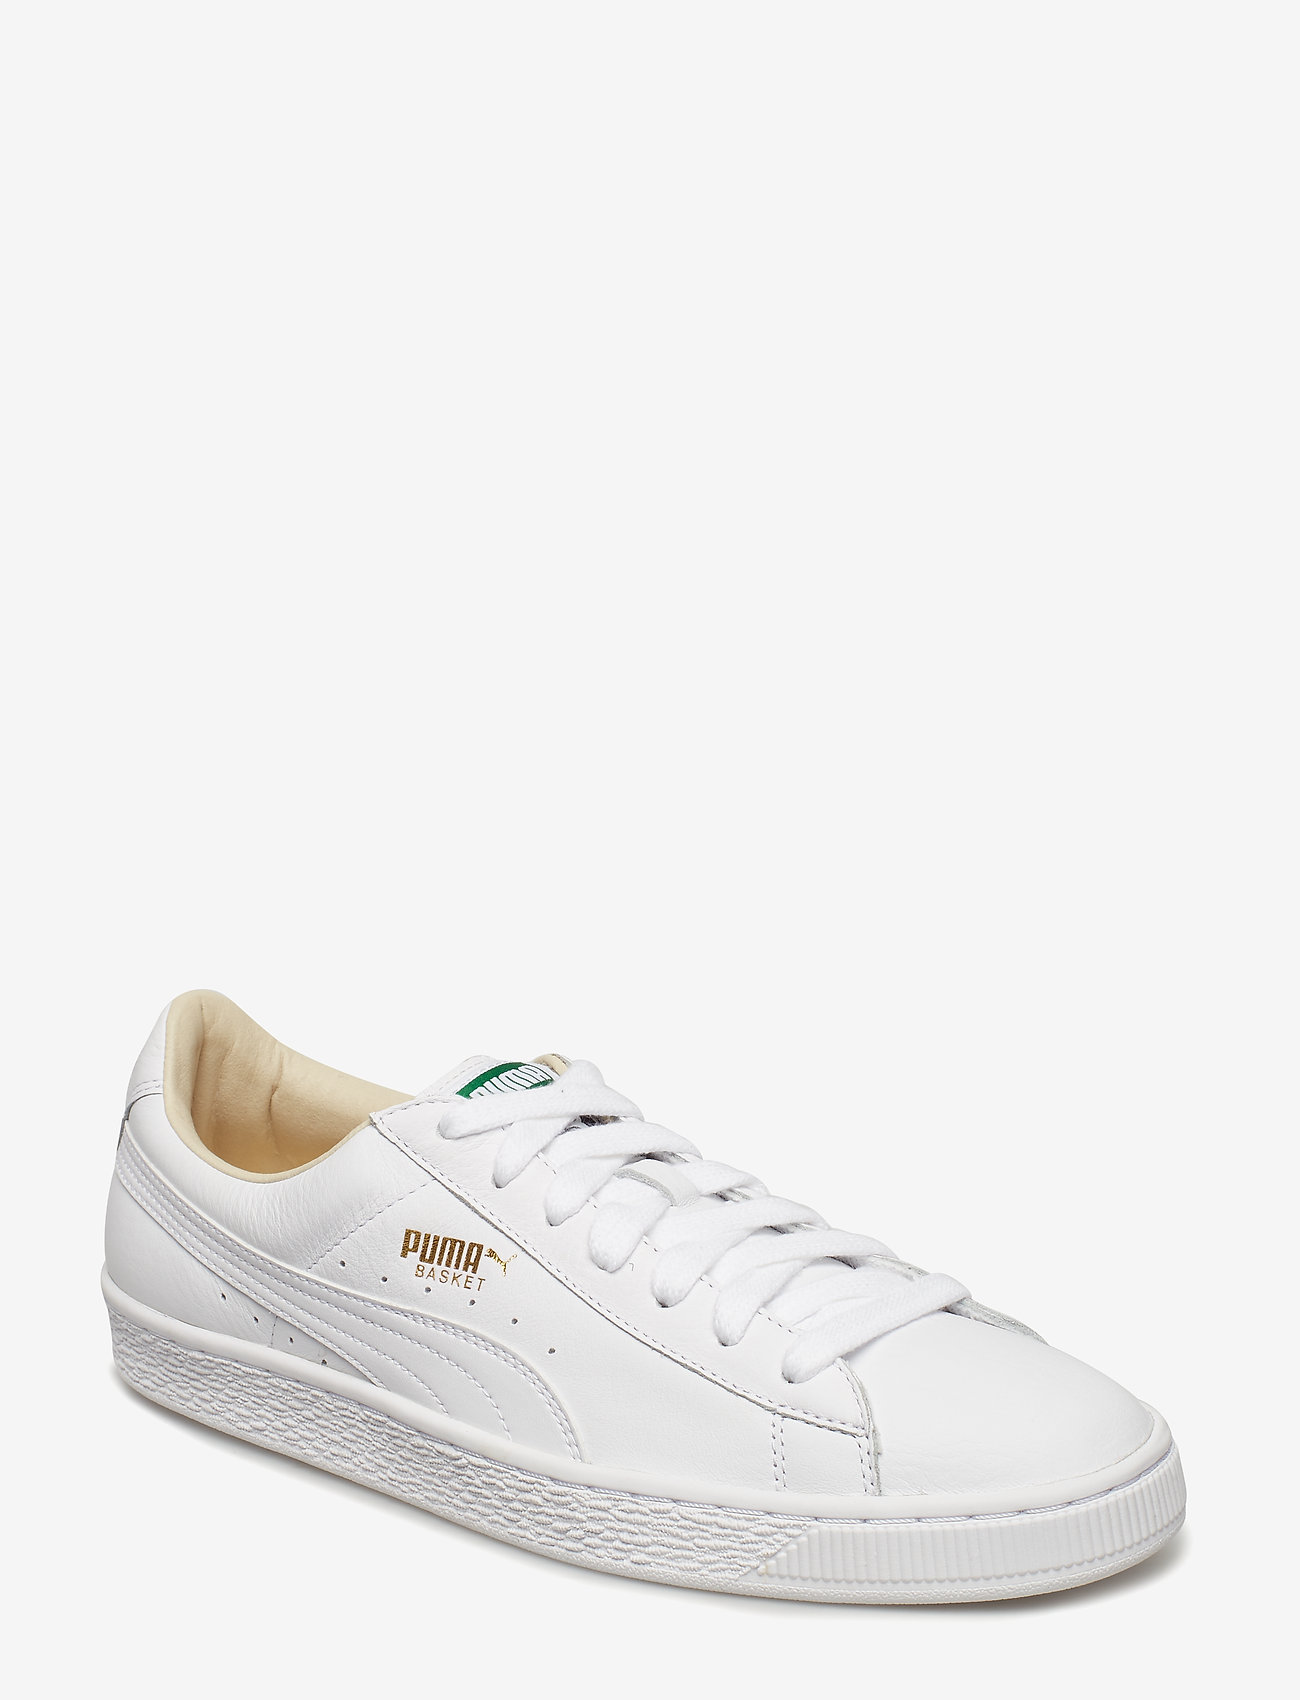 puma basket classic lfs sneakers in white